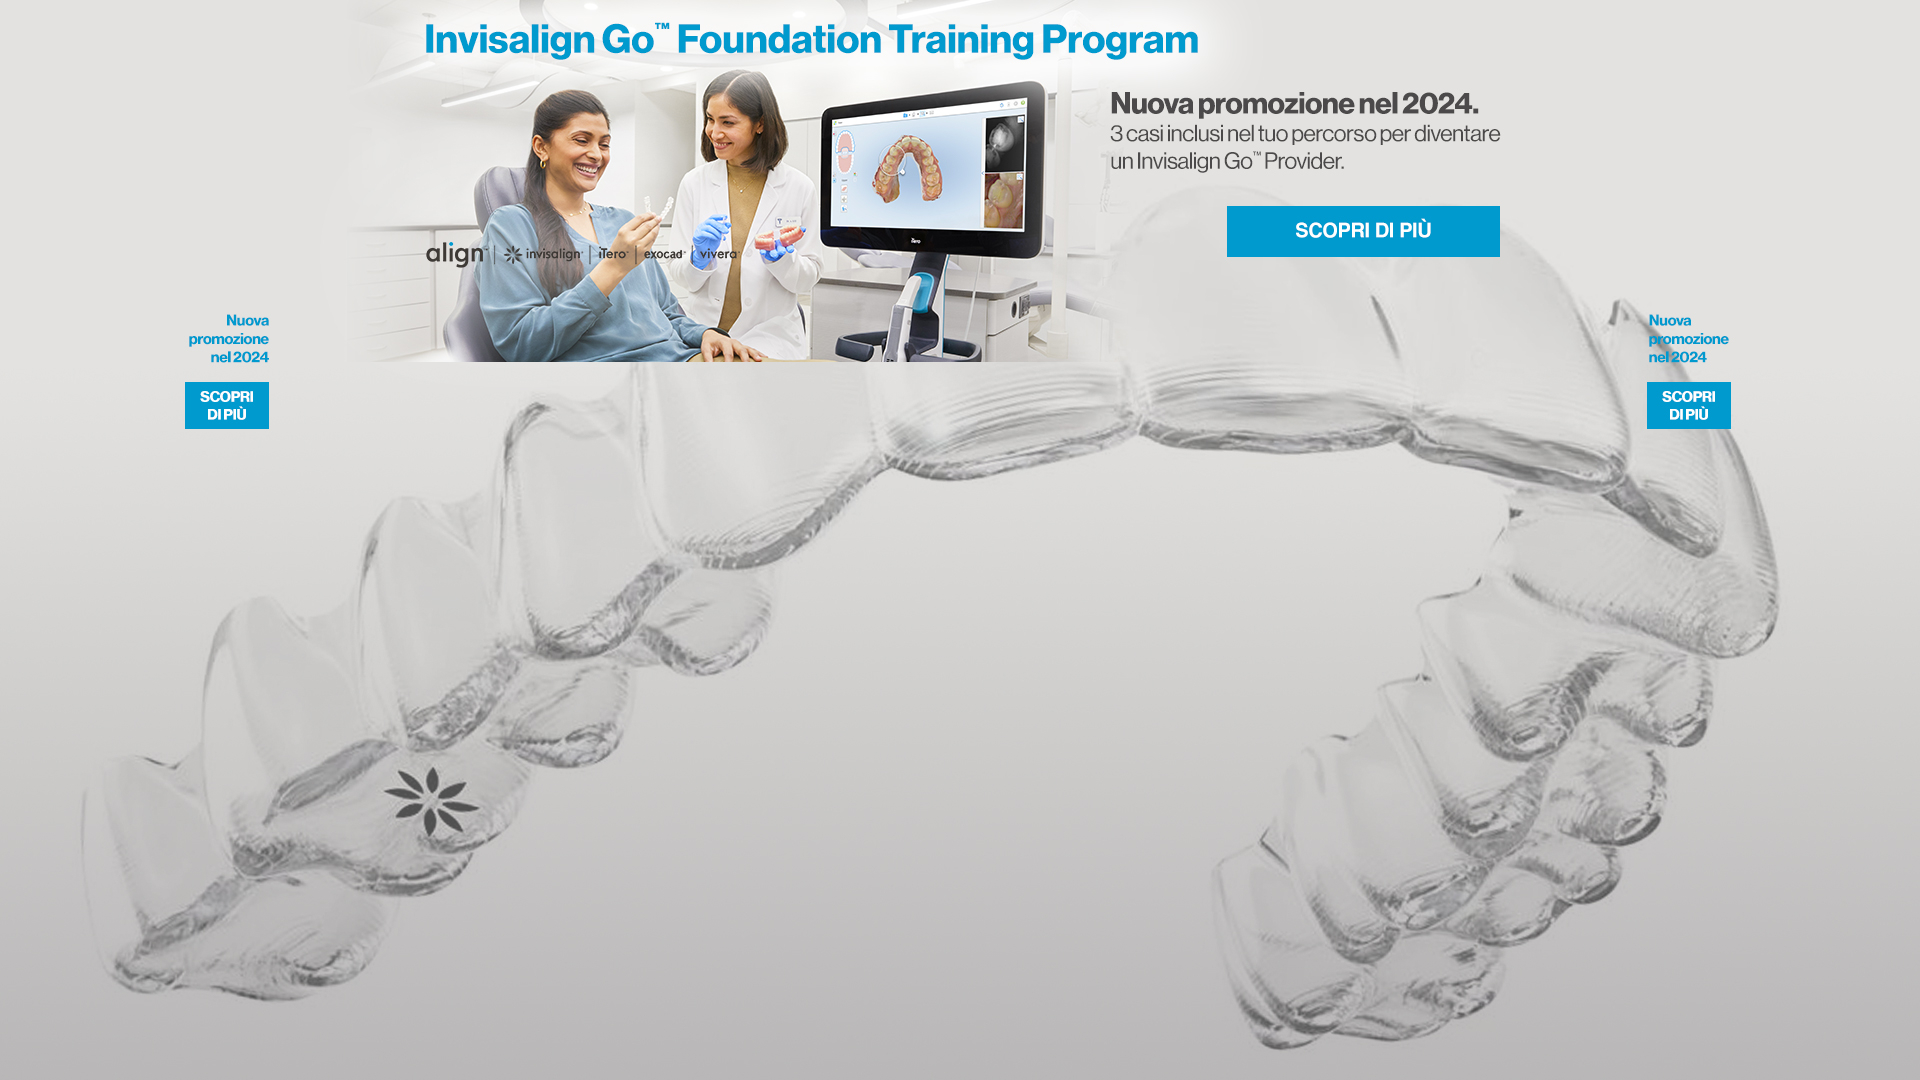 Invisalign Go Foundation Training Program